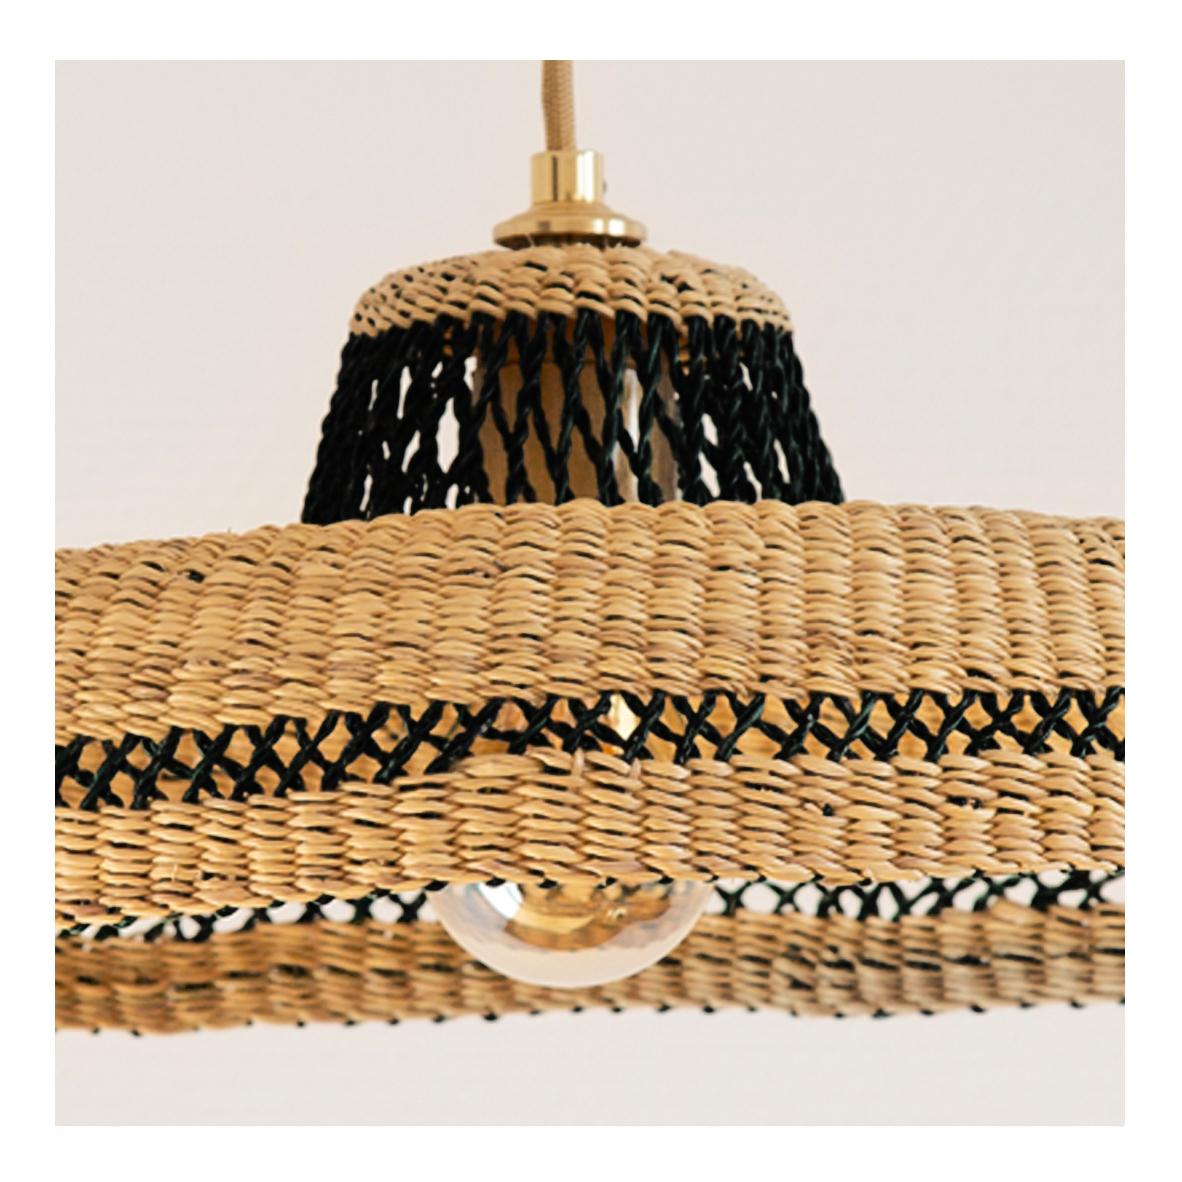 Modern Contemporary Golden Editions Medium Pendant Lamp Handwoven Straw Natural Black